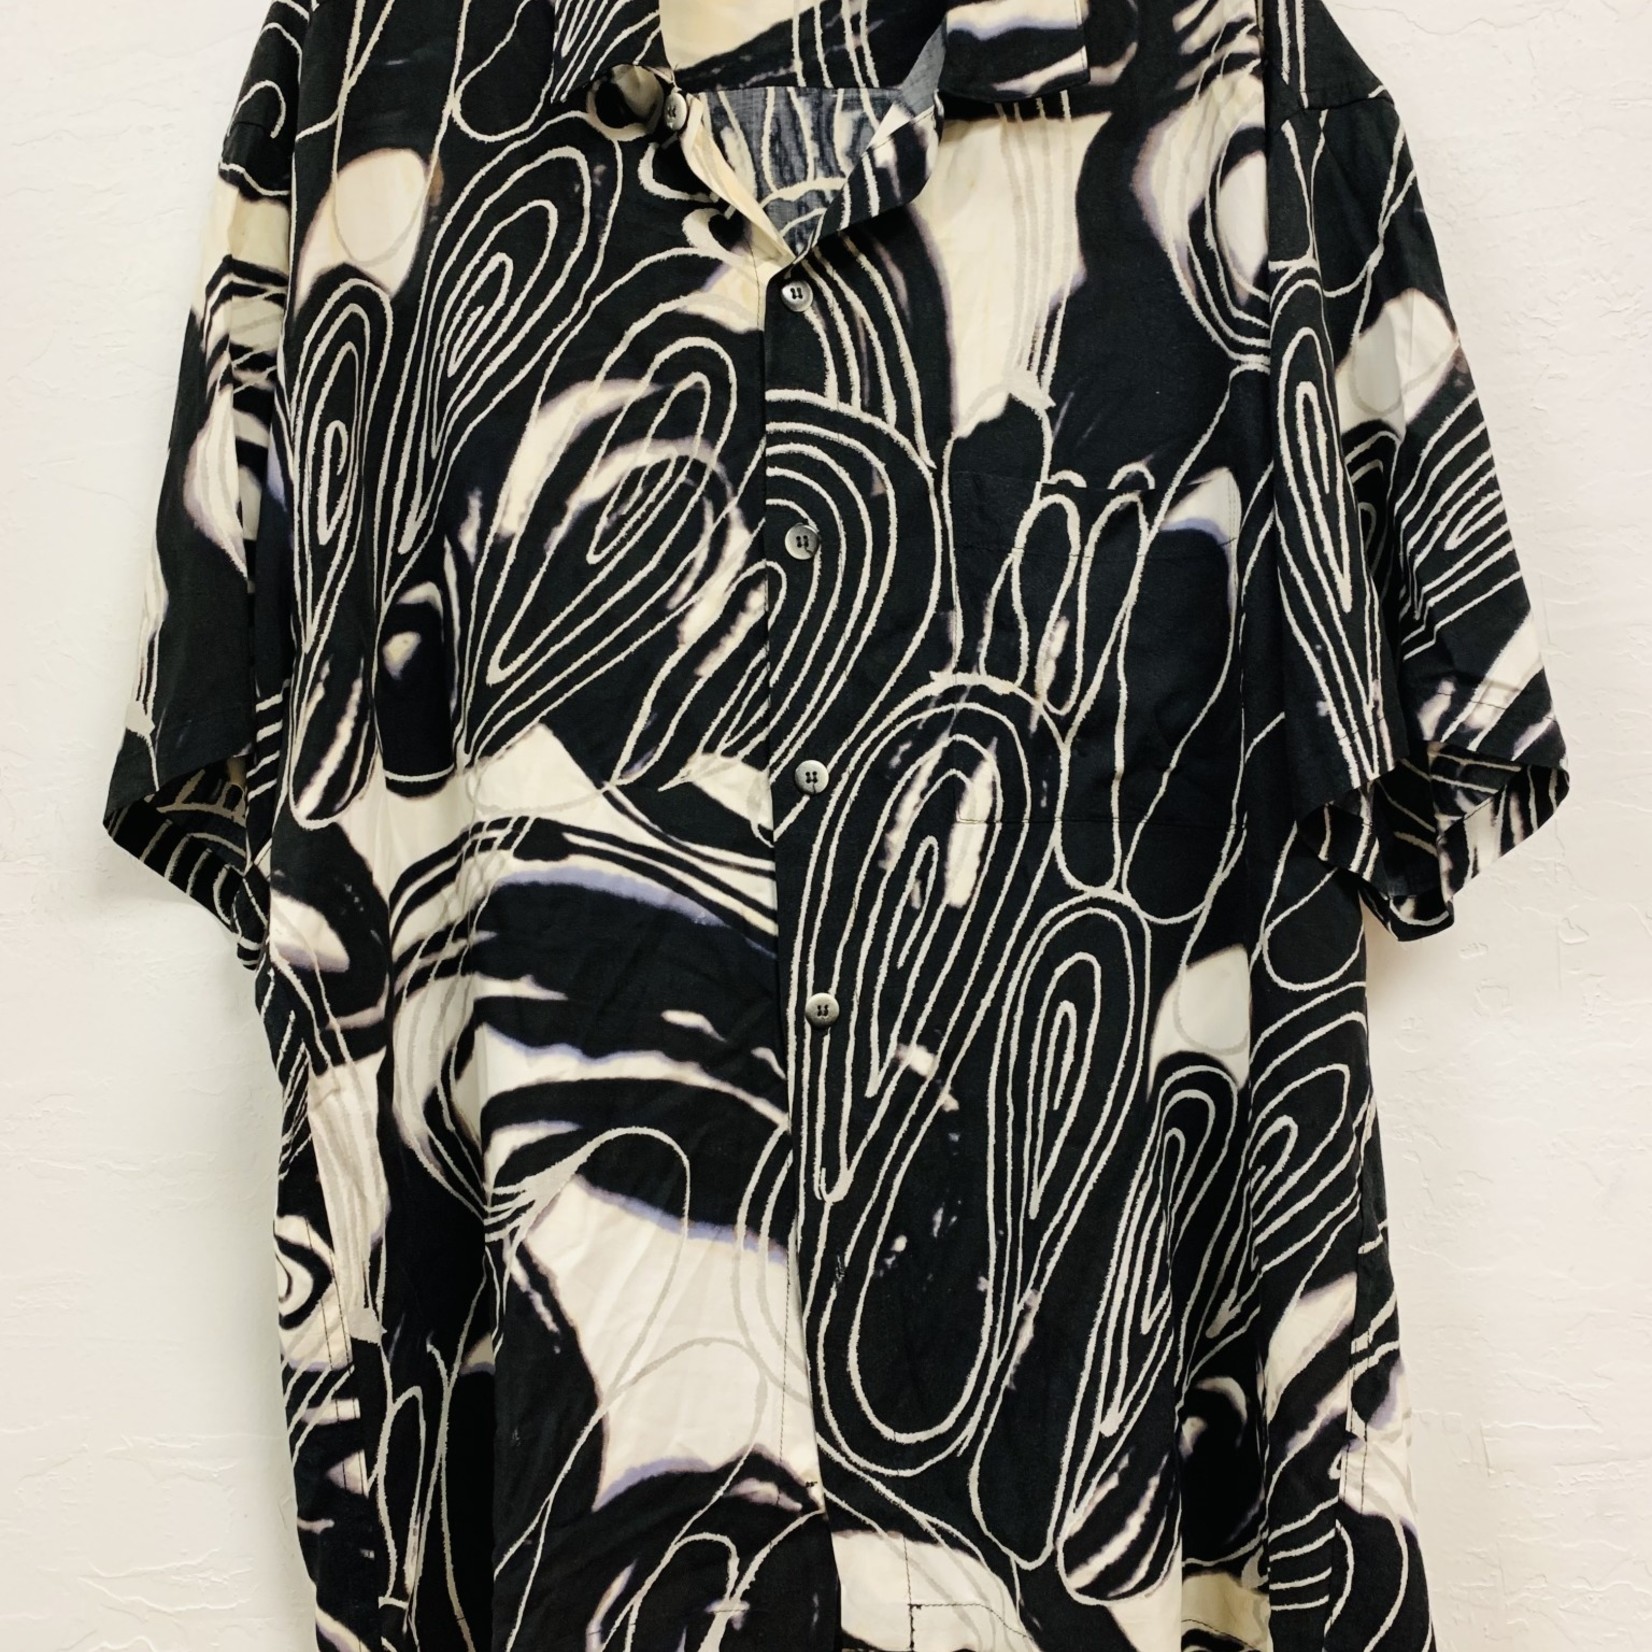 Mission Zero Men's Vintage Aloha Shirt - Exclusive Japanese Rayon Jams World Black Marble Large